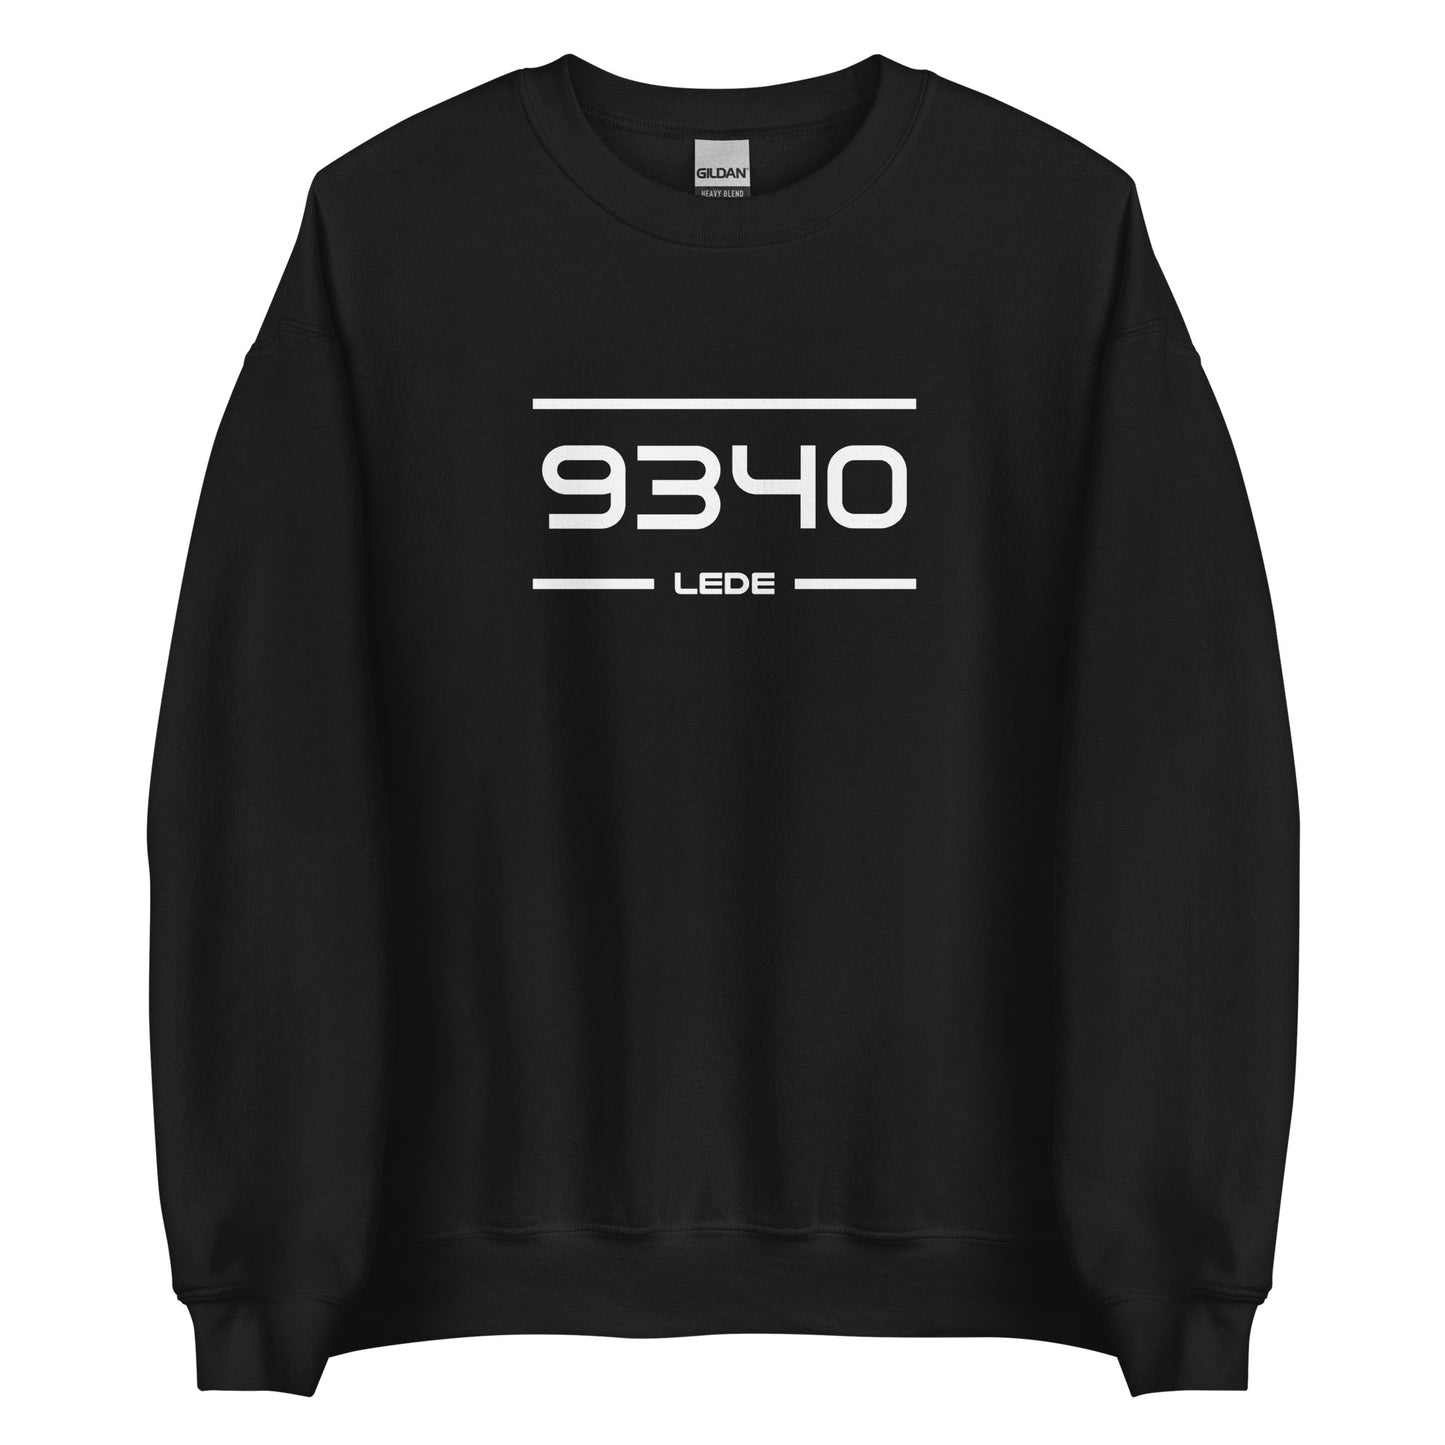 Sweater - 9340 - Lede (M/V)